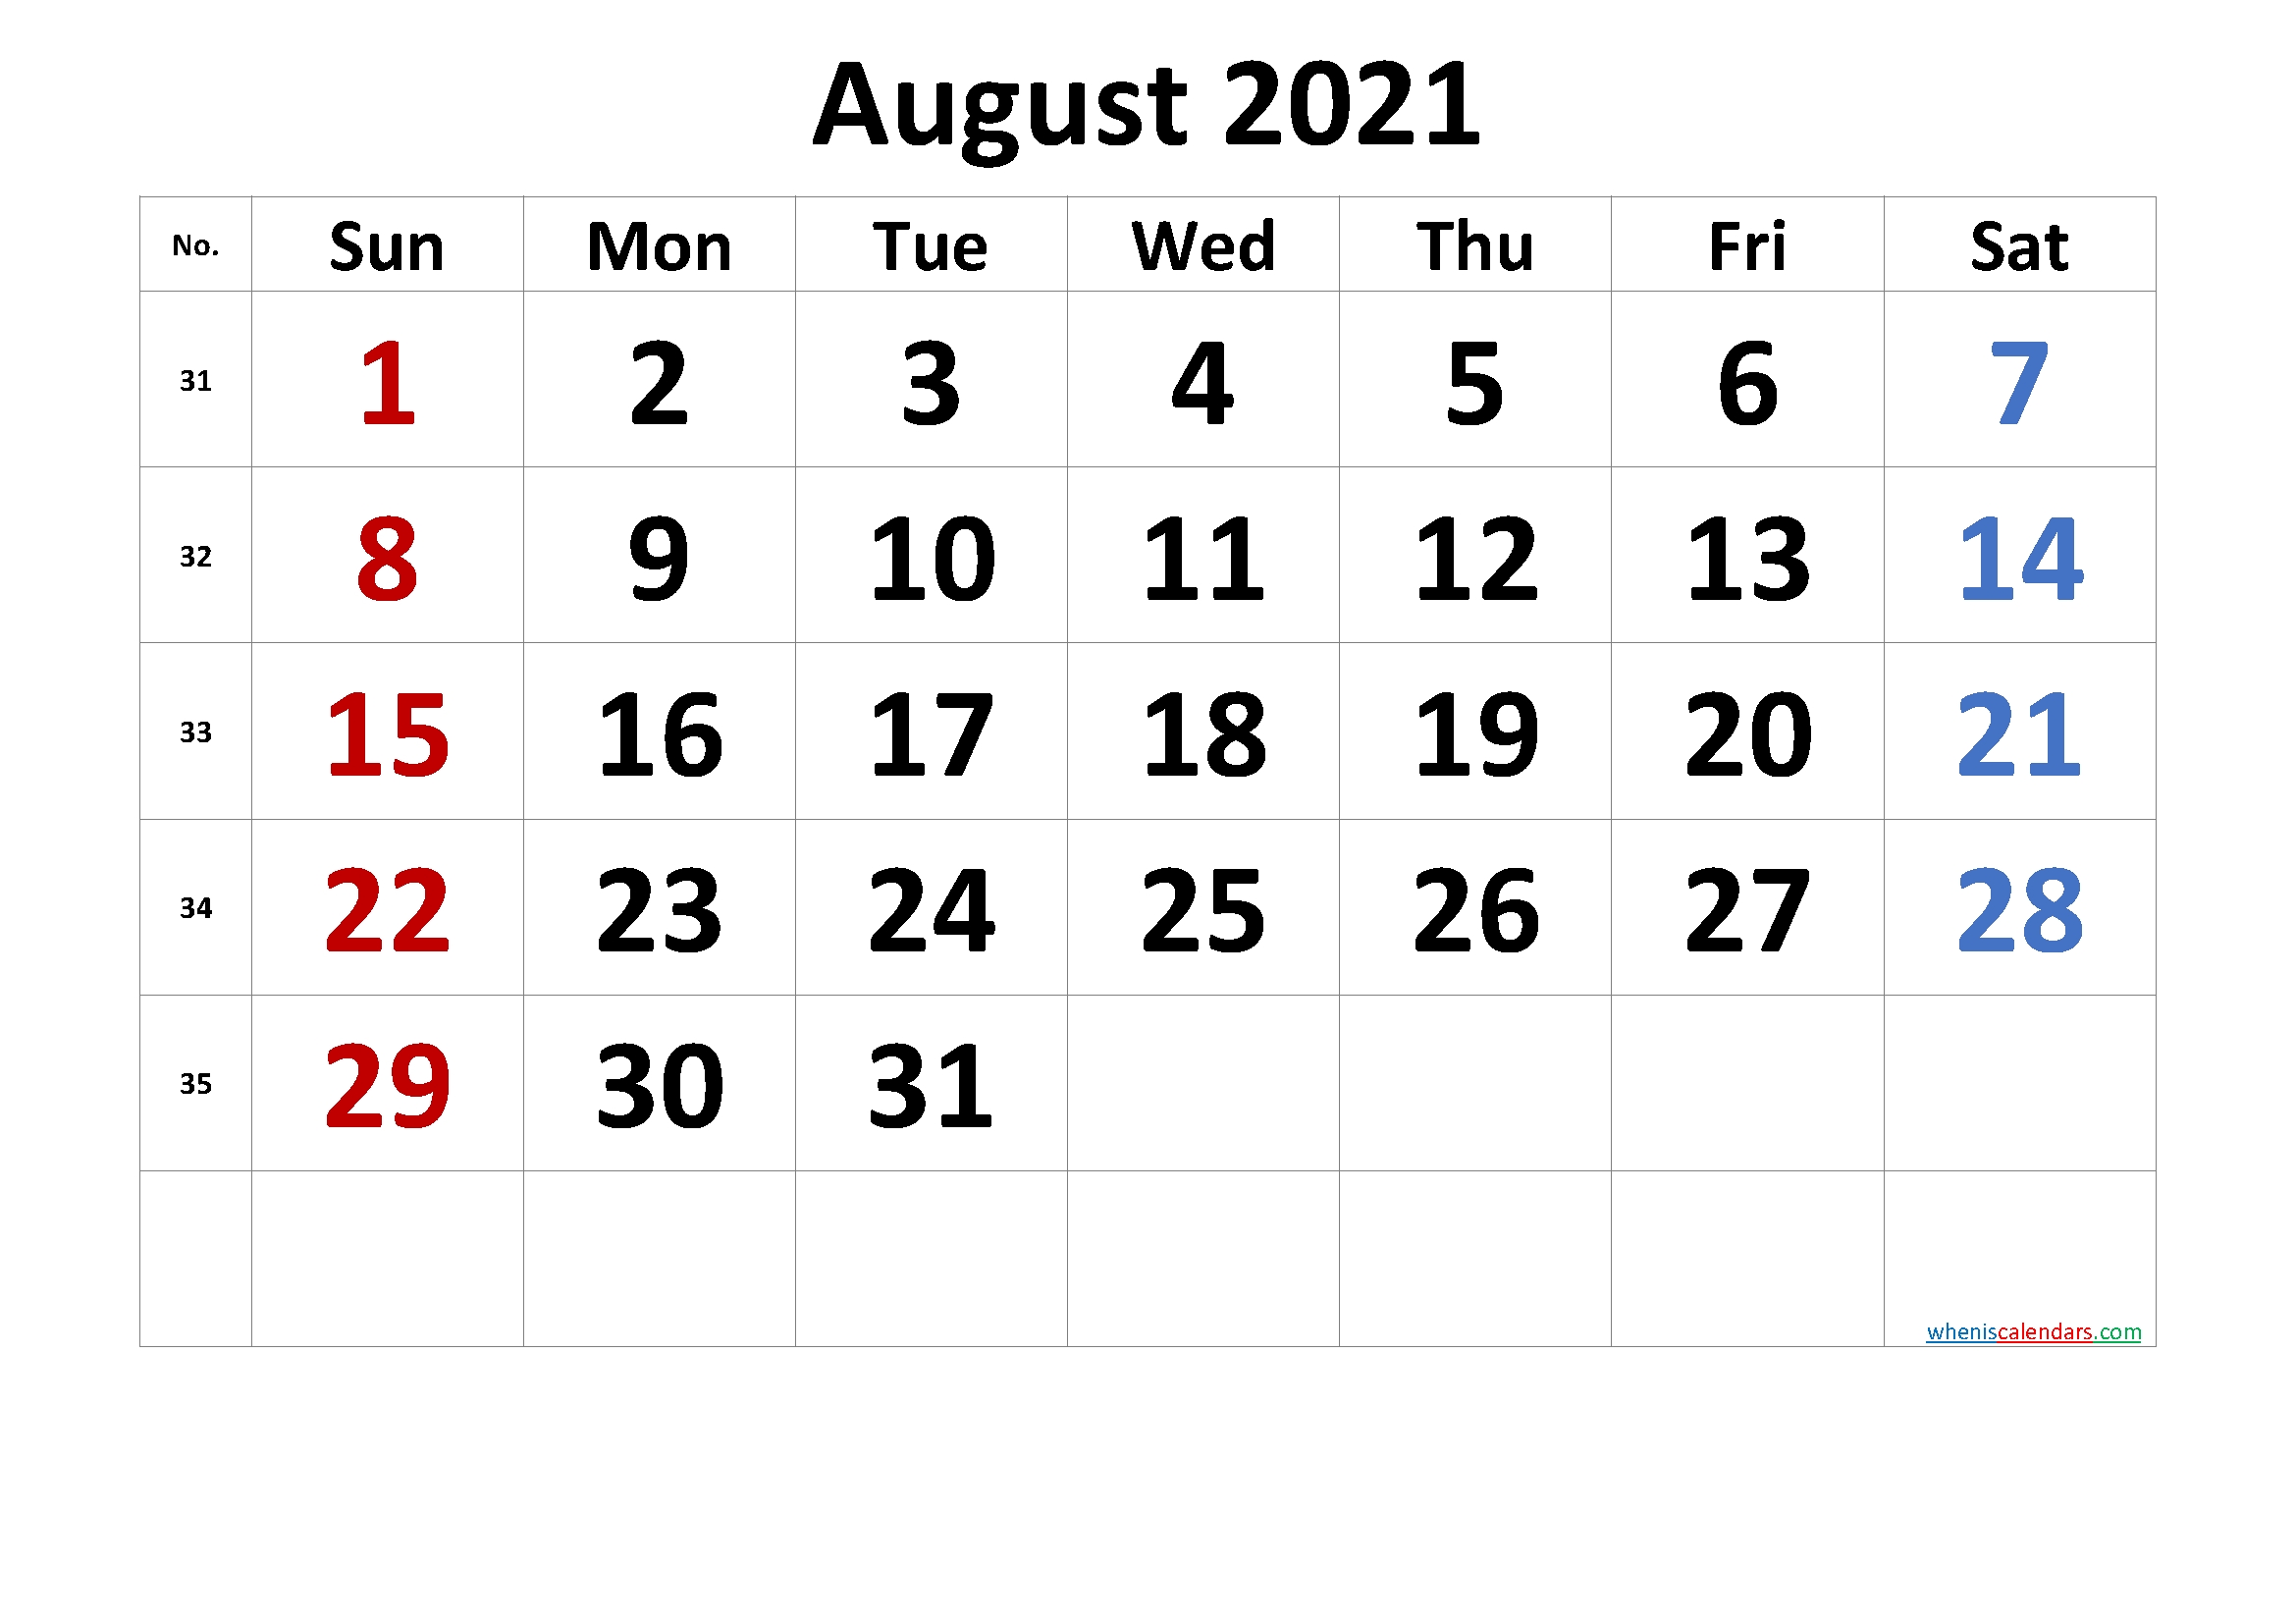 Get August 2021 Coloring Calendars